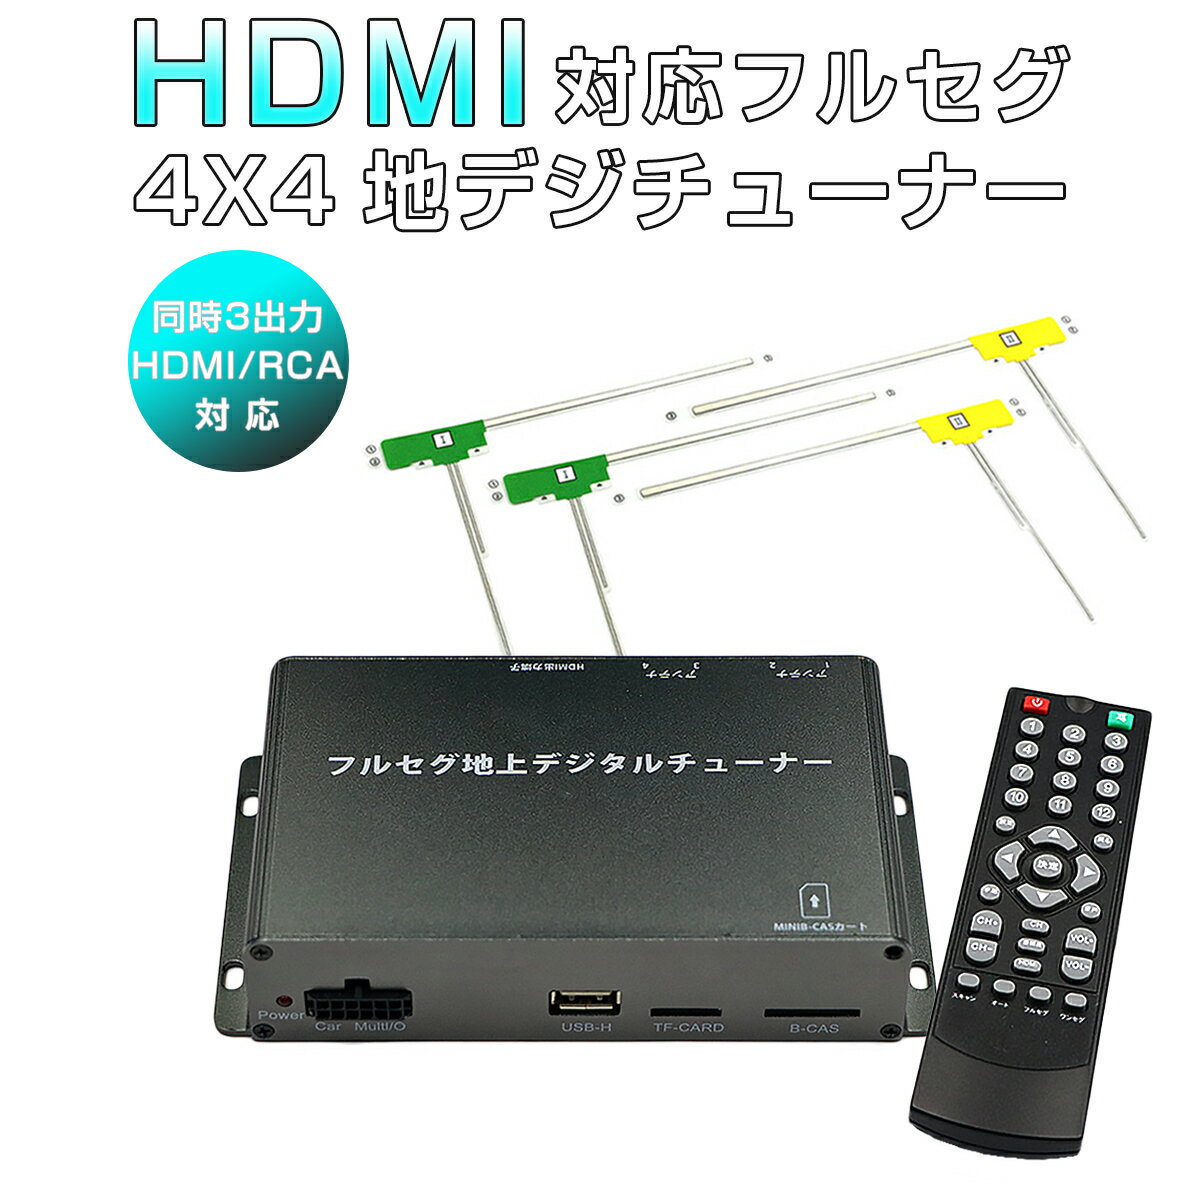 DAIHATSU用の非純正品 リーザ 地デジチューナー カーナビ ワンセグ フルセグ HDMI 4x4 高性能 4チューナー 4アンテナ 自動切換 150km/hまで受信 高画質 古い車載TVやカーナビにも使える 12V/24V フィルムアンテナ miniB-CASカード付き 6ヶ月保証